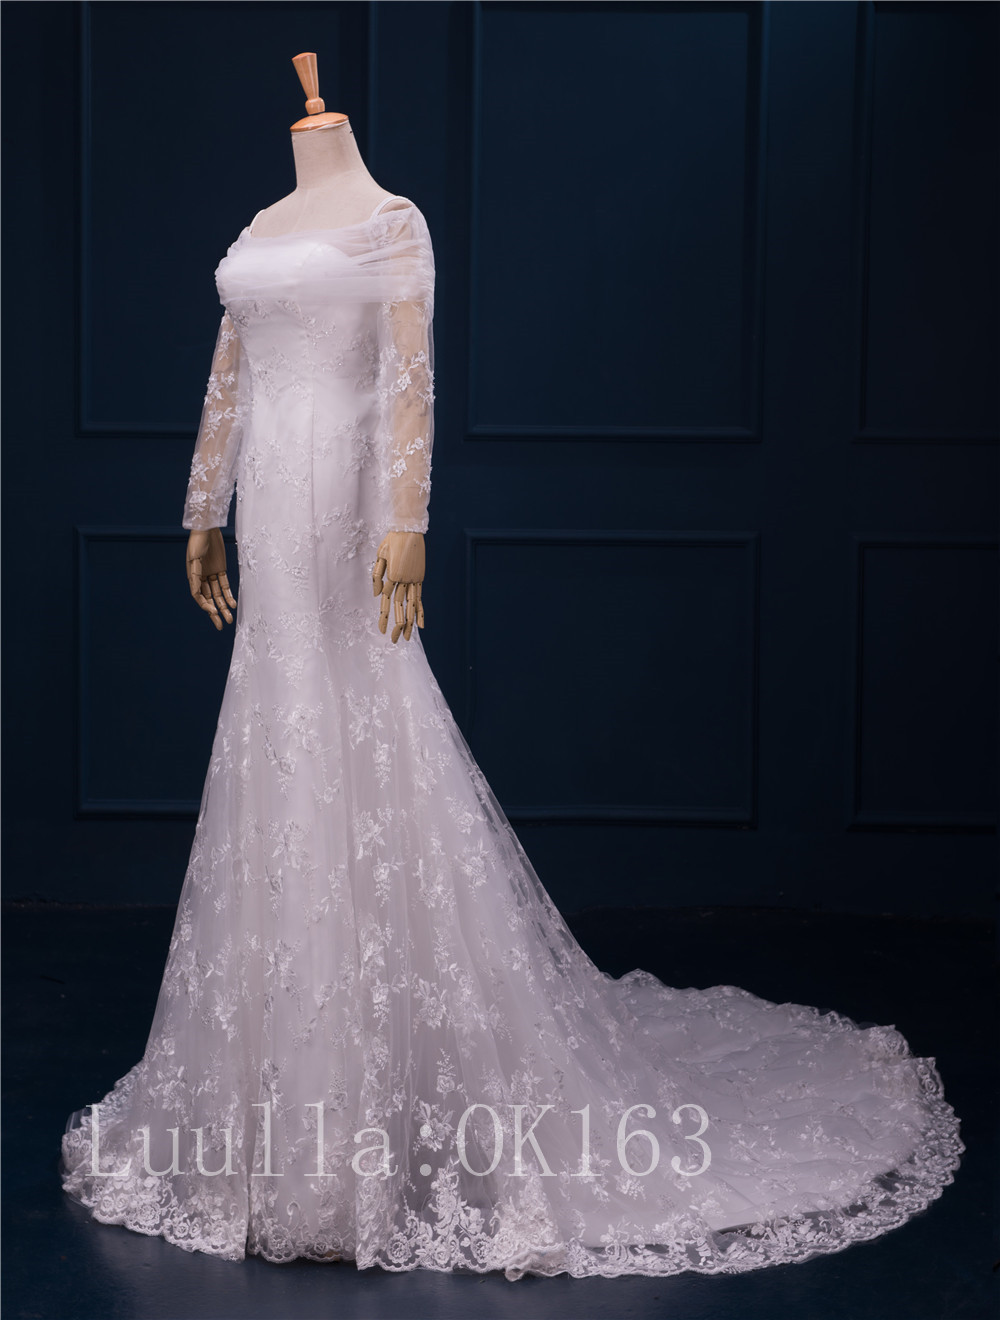 Women Fashion White/ivory Lace Wedding Dress Bridal Gown Sexy Long Sleeve Dress Long Train Prom Dress Kk43